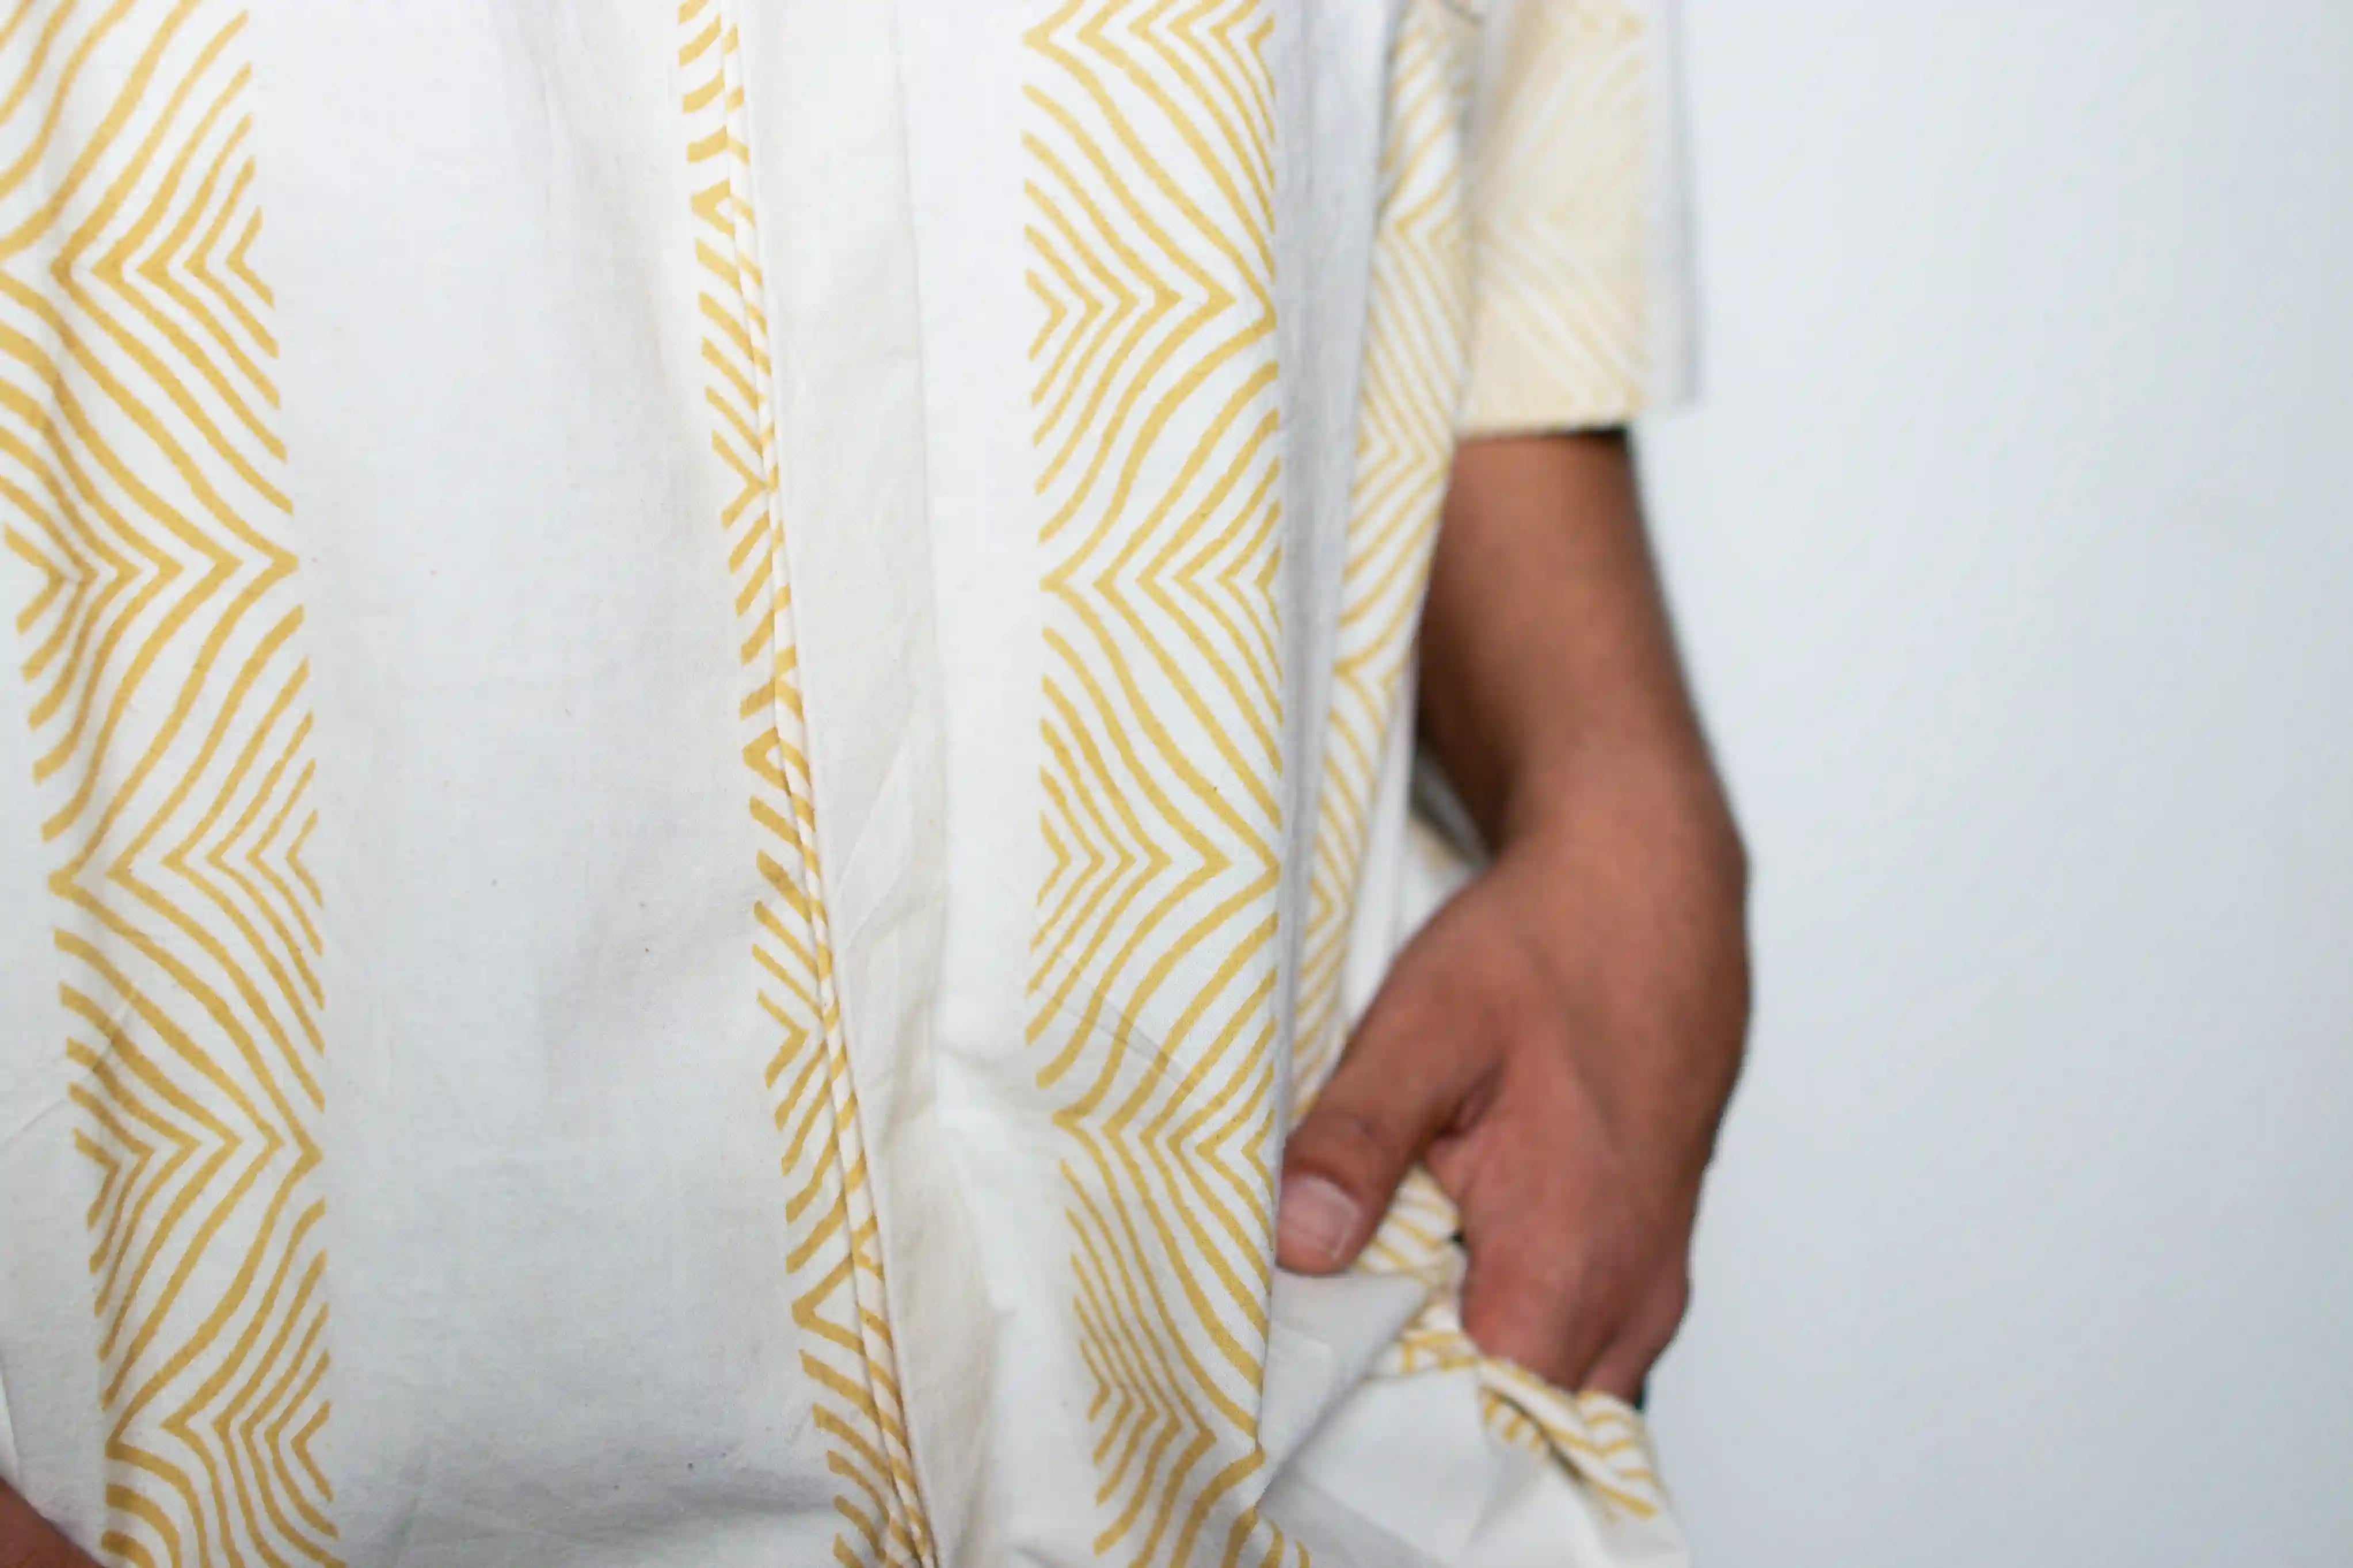 ilamra men's hand block printed naturally dyed organic cotton off-white and yellow shirt